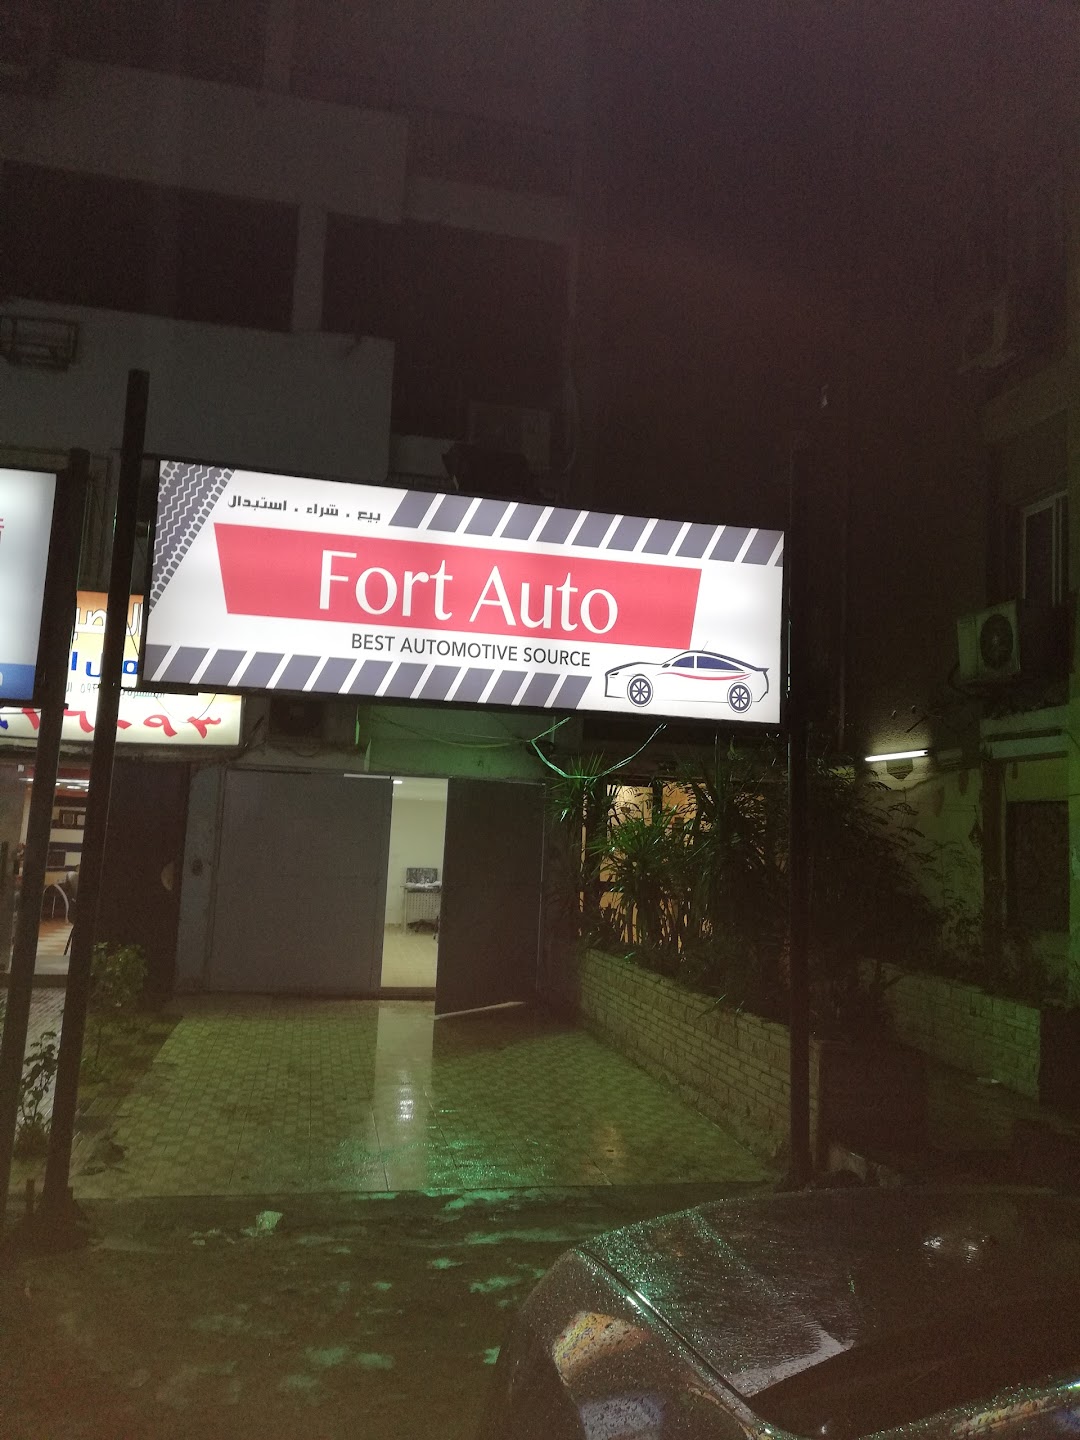 Fort Auto trade